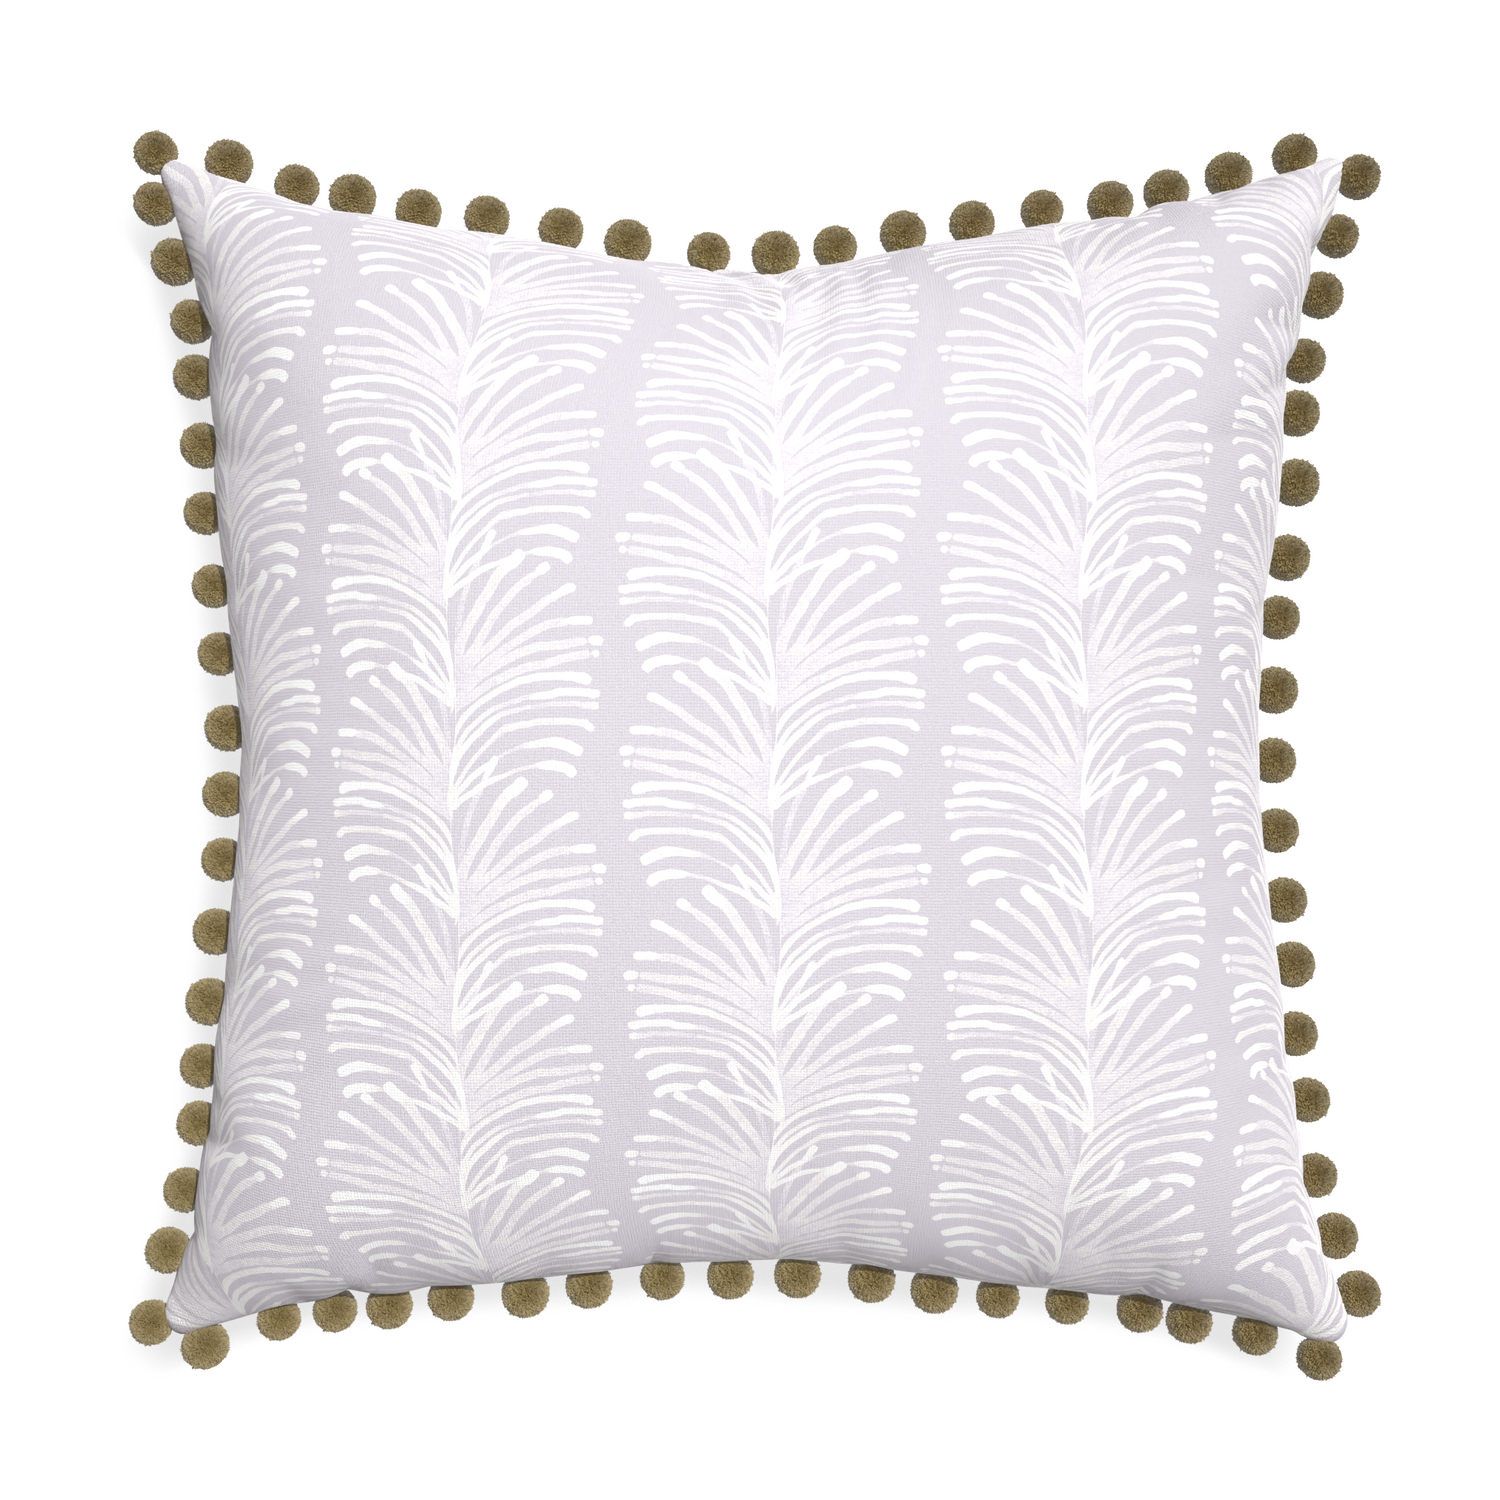 Euro-sham emma lavender custom pillow with olive pom pom on white background